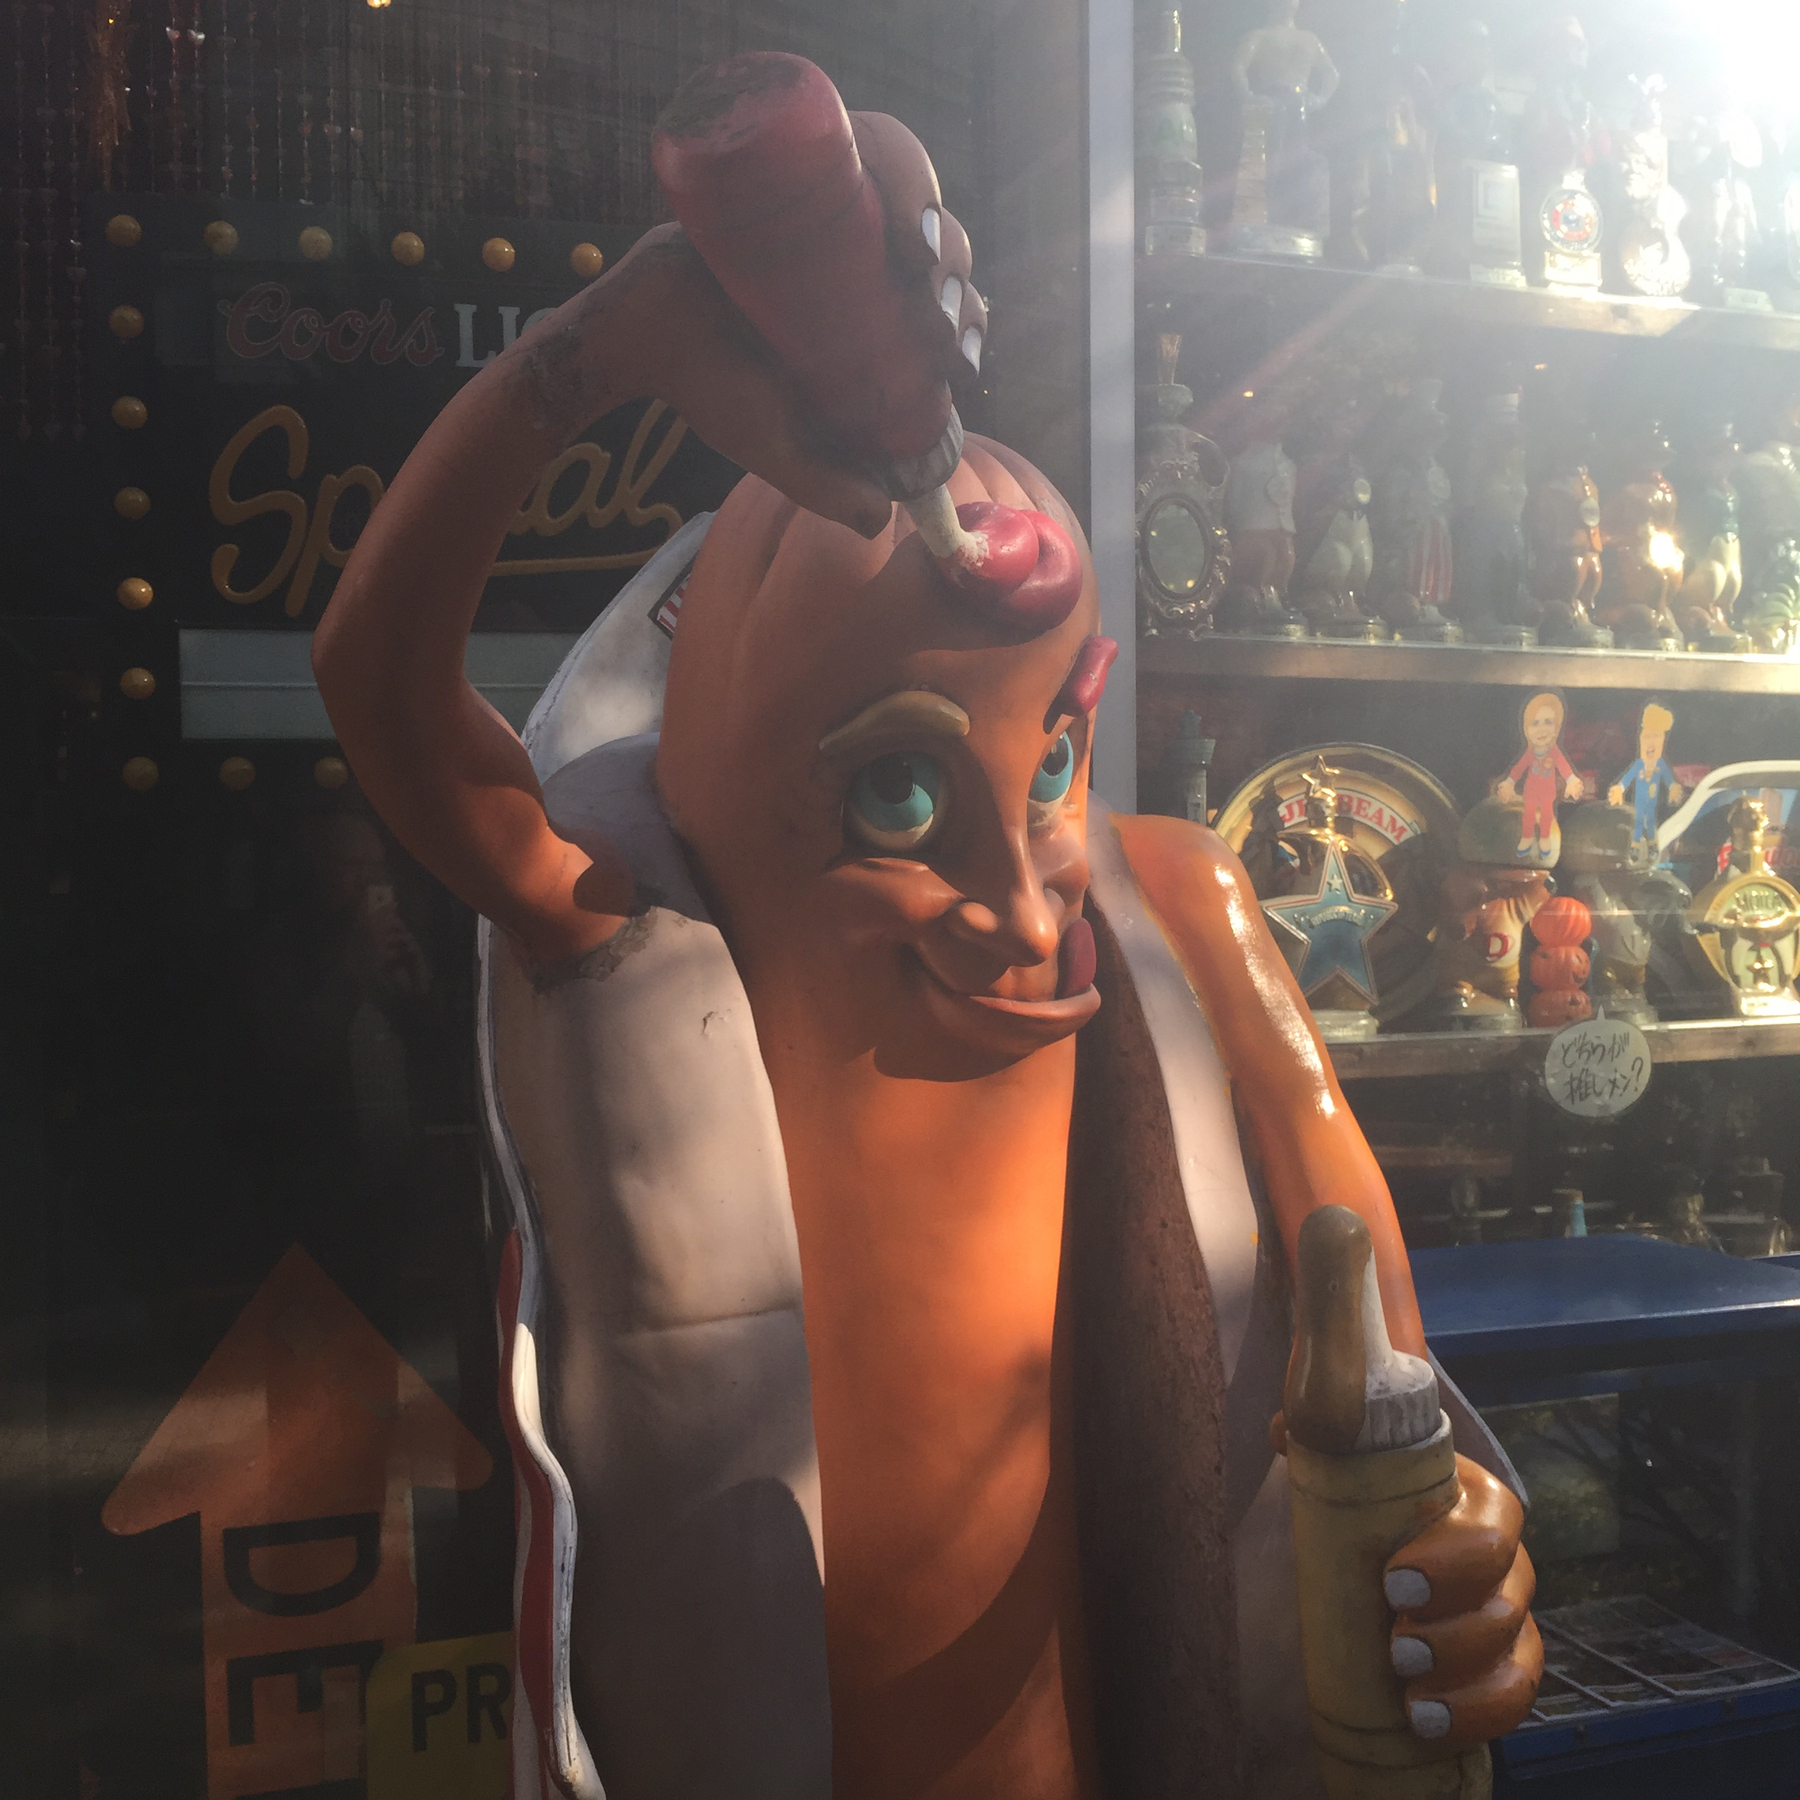 Kitschy hotdog mascot dousing itself with ketchup 